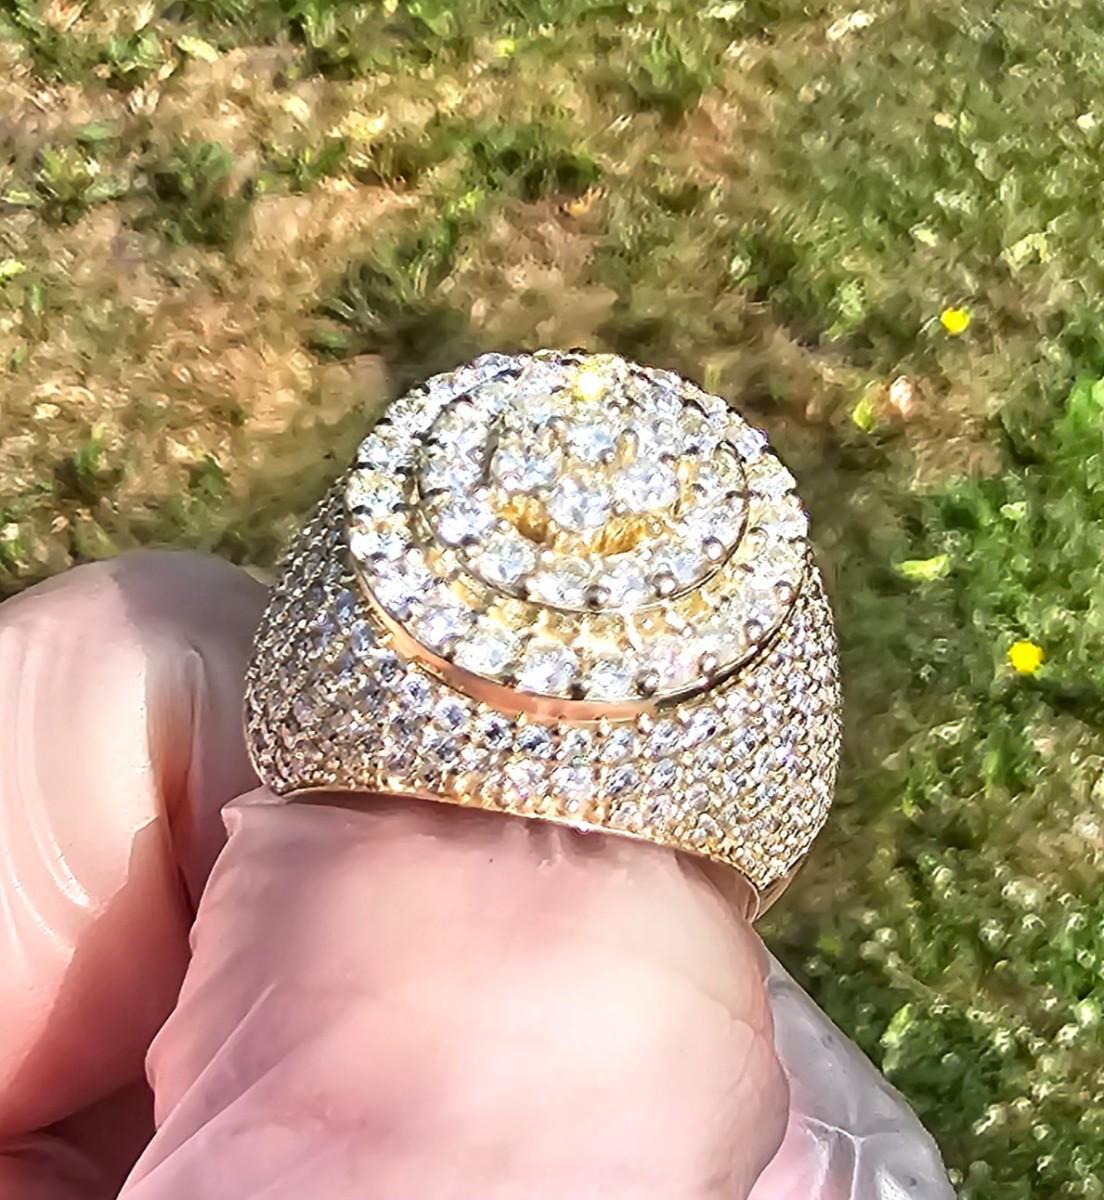 Beautifully appraised at 14k diamond gold ring | EstateSales.org